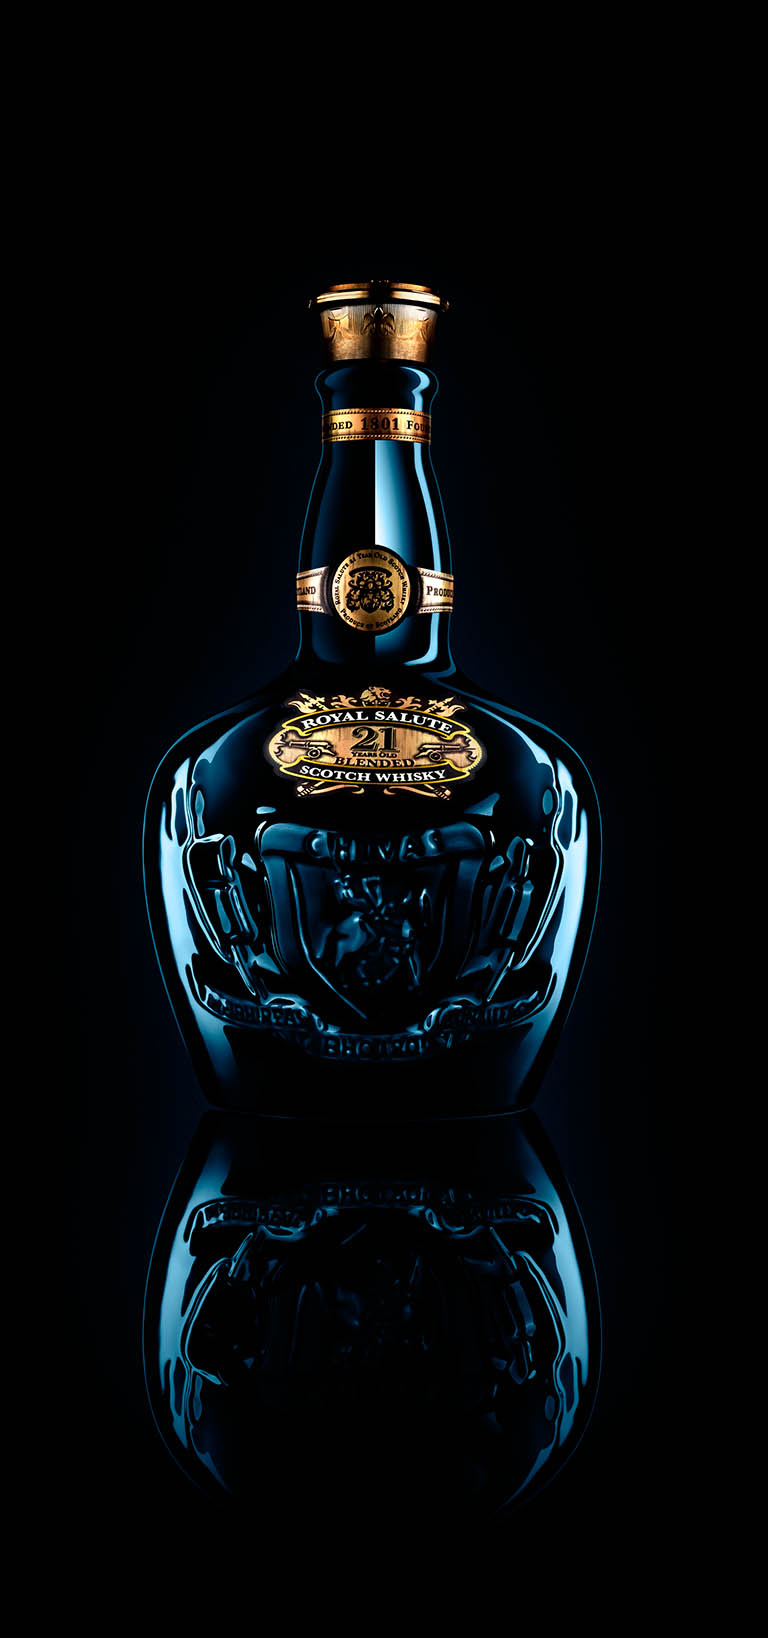 Packshot Factory - Black background - Chivas Royal Salute whisky bottle